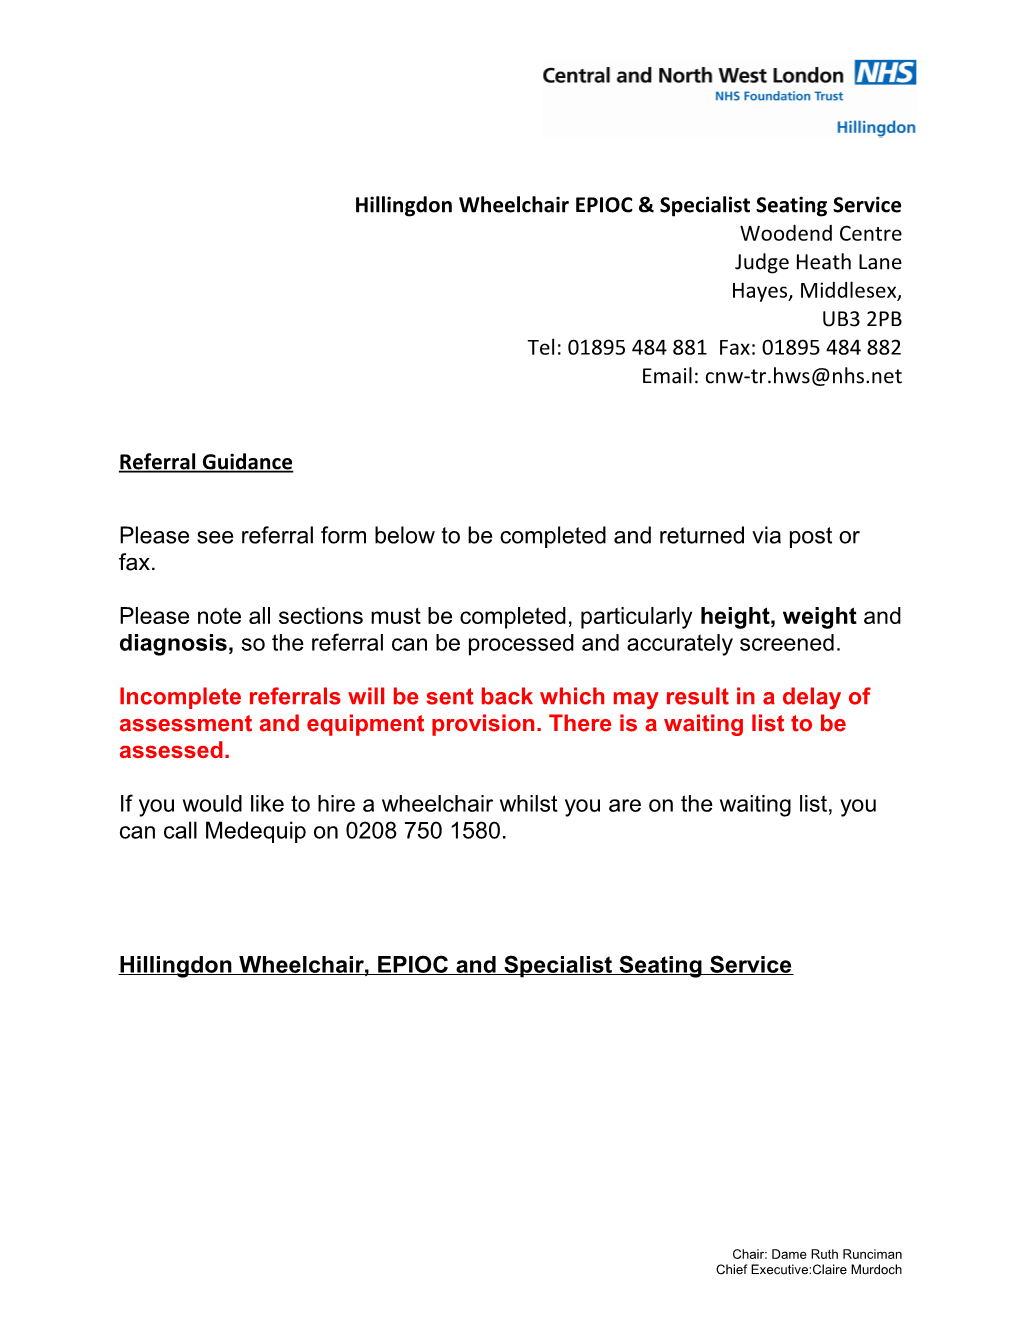 Hillingdon Wheelchair EPIOC & Specialist Seating Service